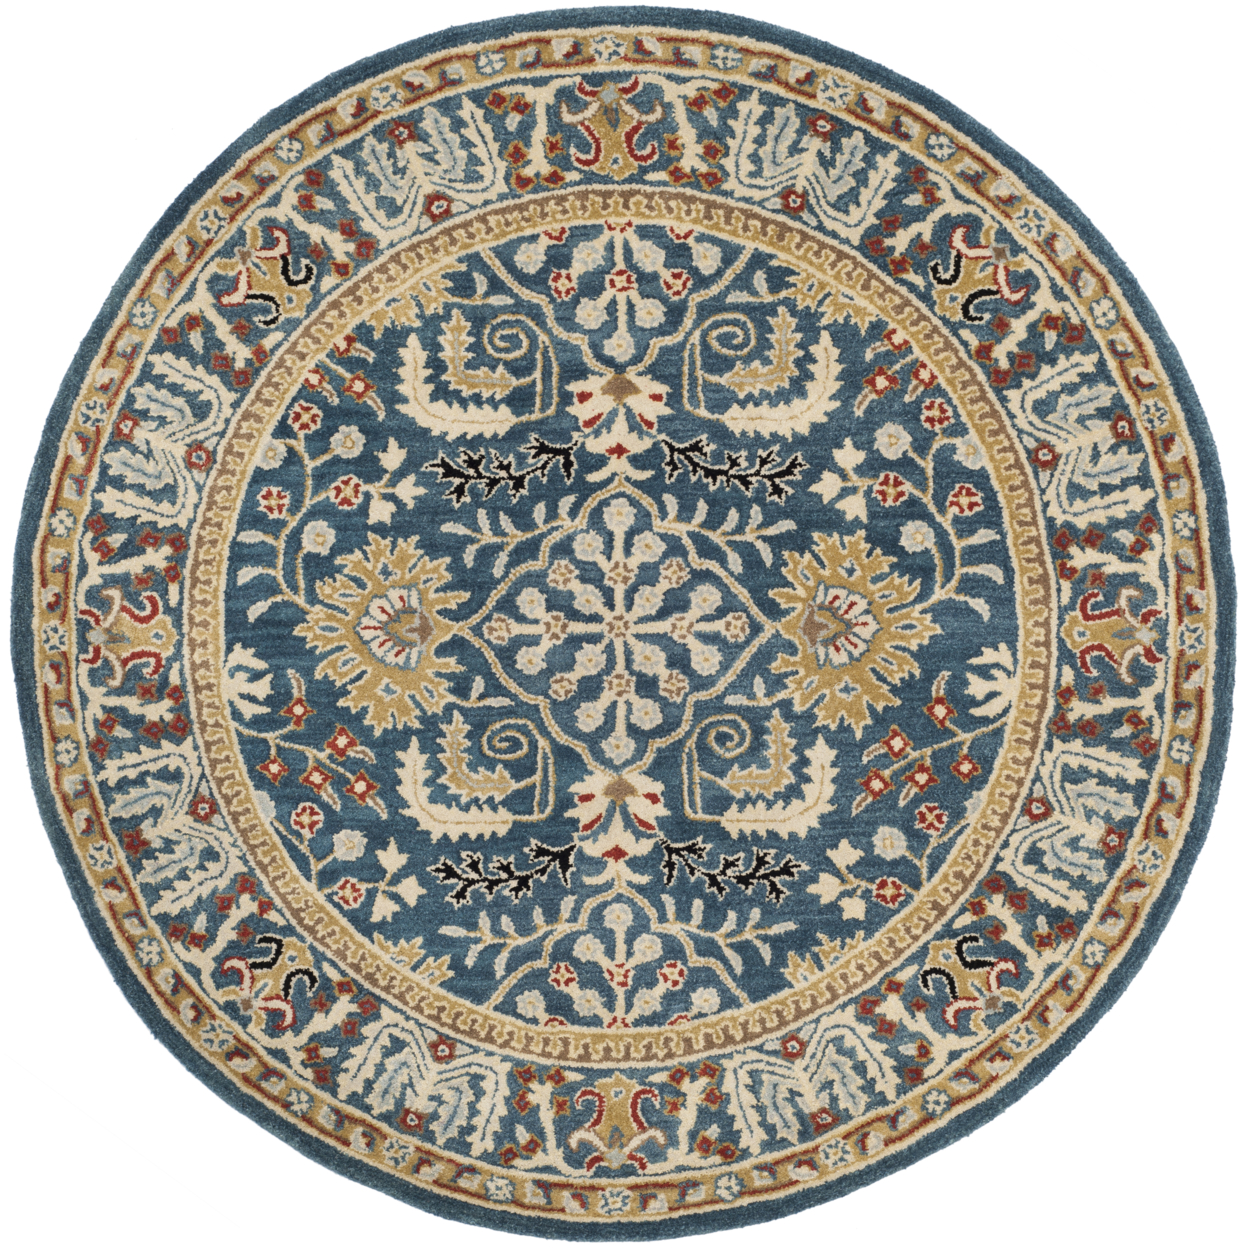 SAFAVIEH AT64B Antiquity Dark Blue / Multi - 4' Round